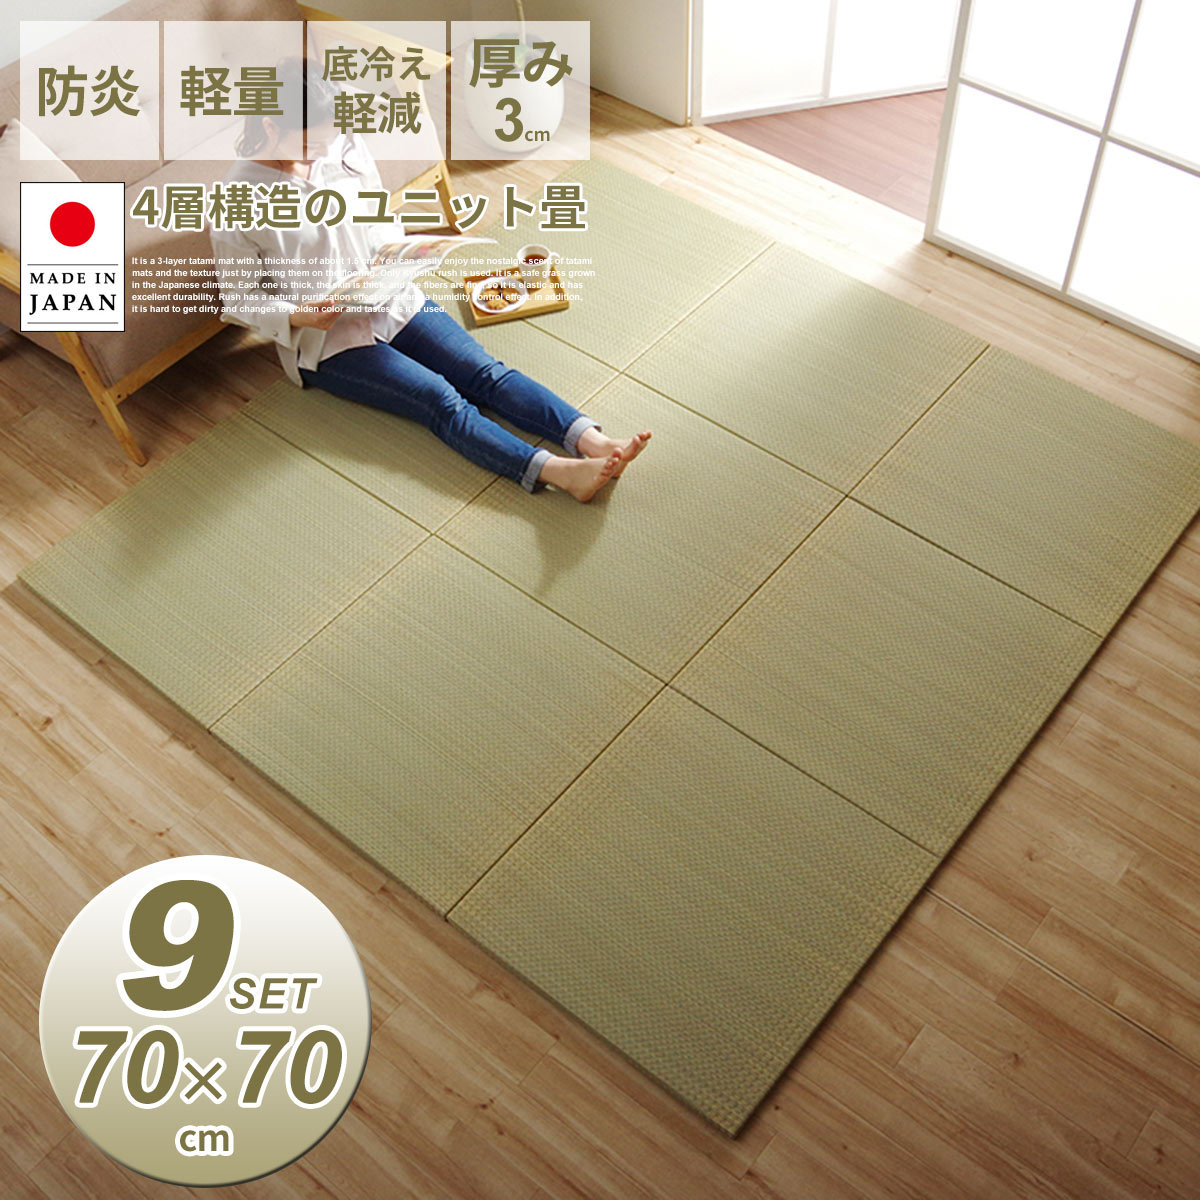 置き畳 い草 9枚 日本製 70×70cm 厚み3cm 国産 簡単設置 和室 4層 軽量